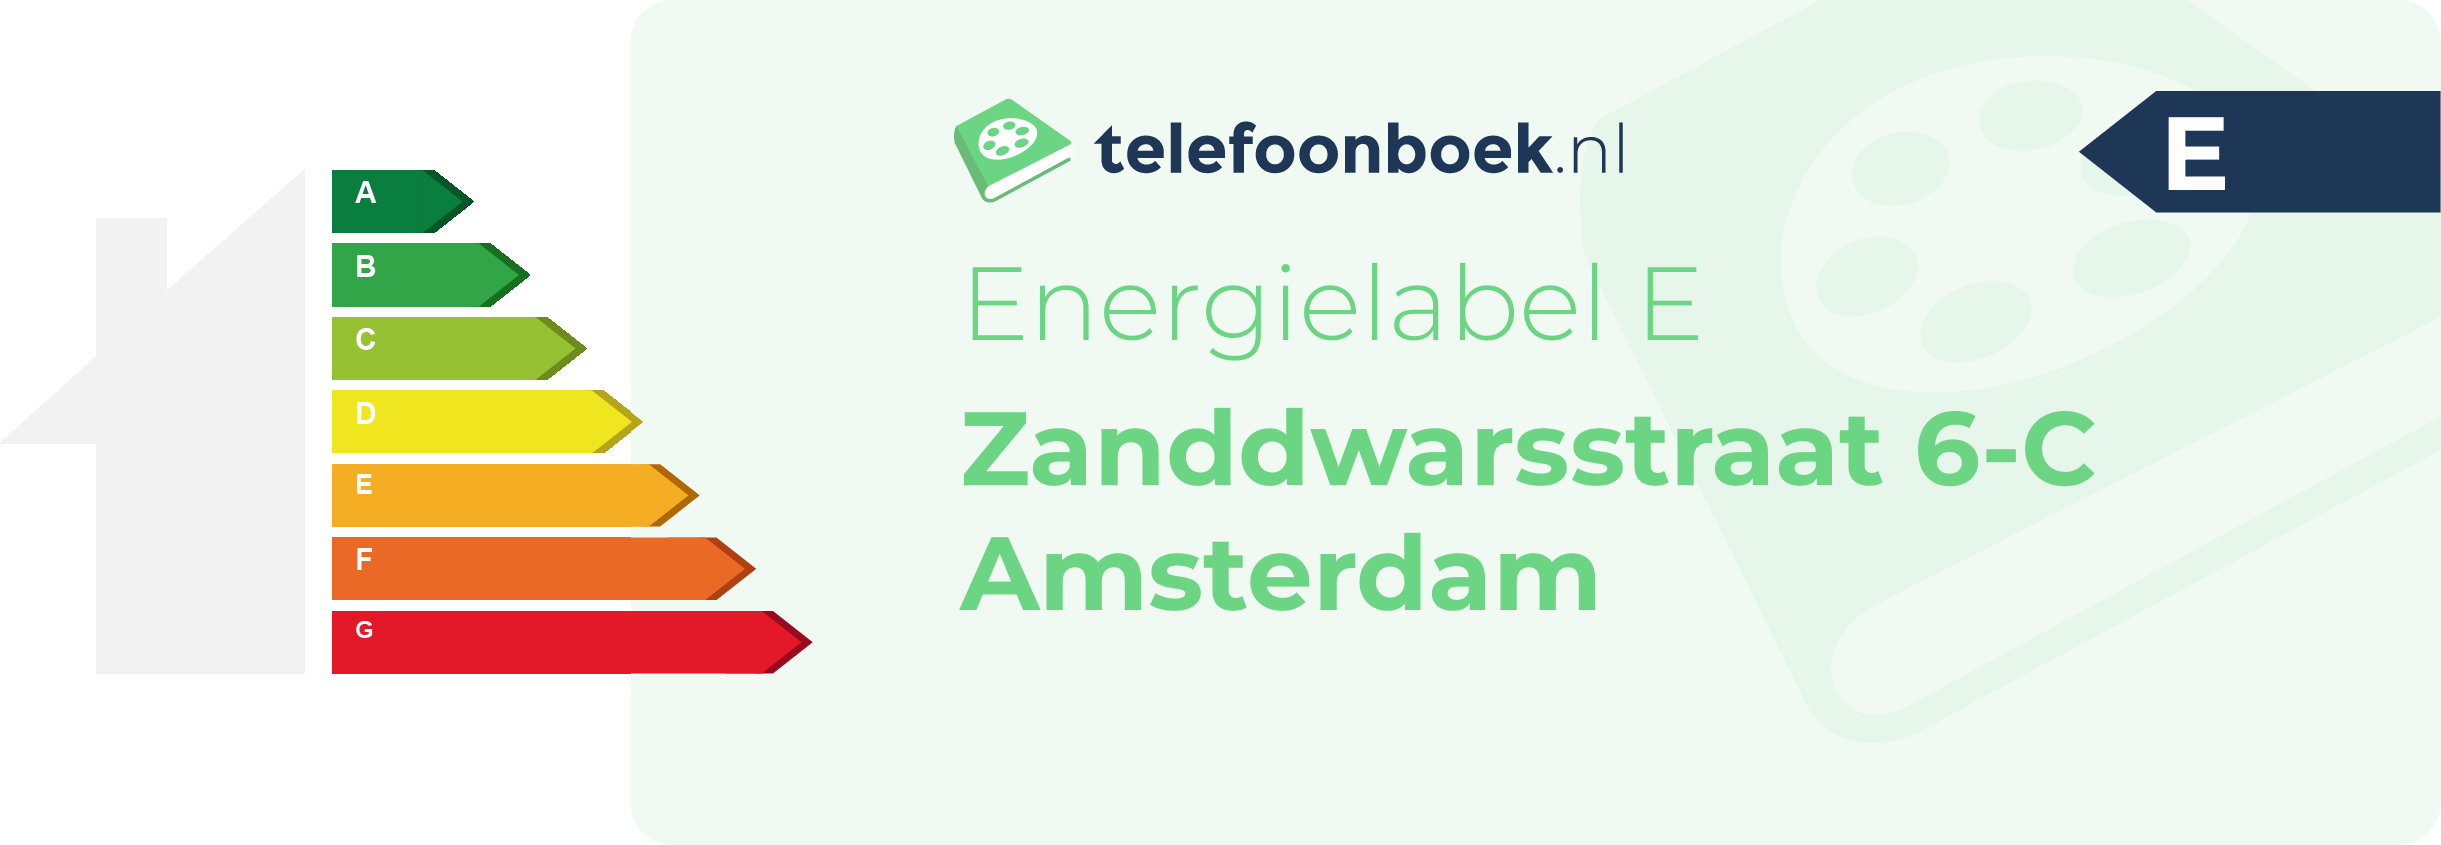 Energielabel Zanddwarsstraat 6-C Amsterdam